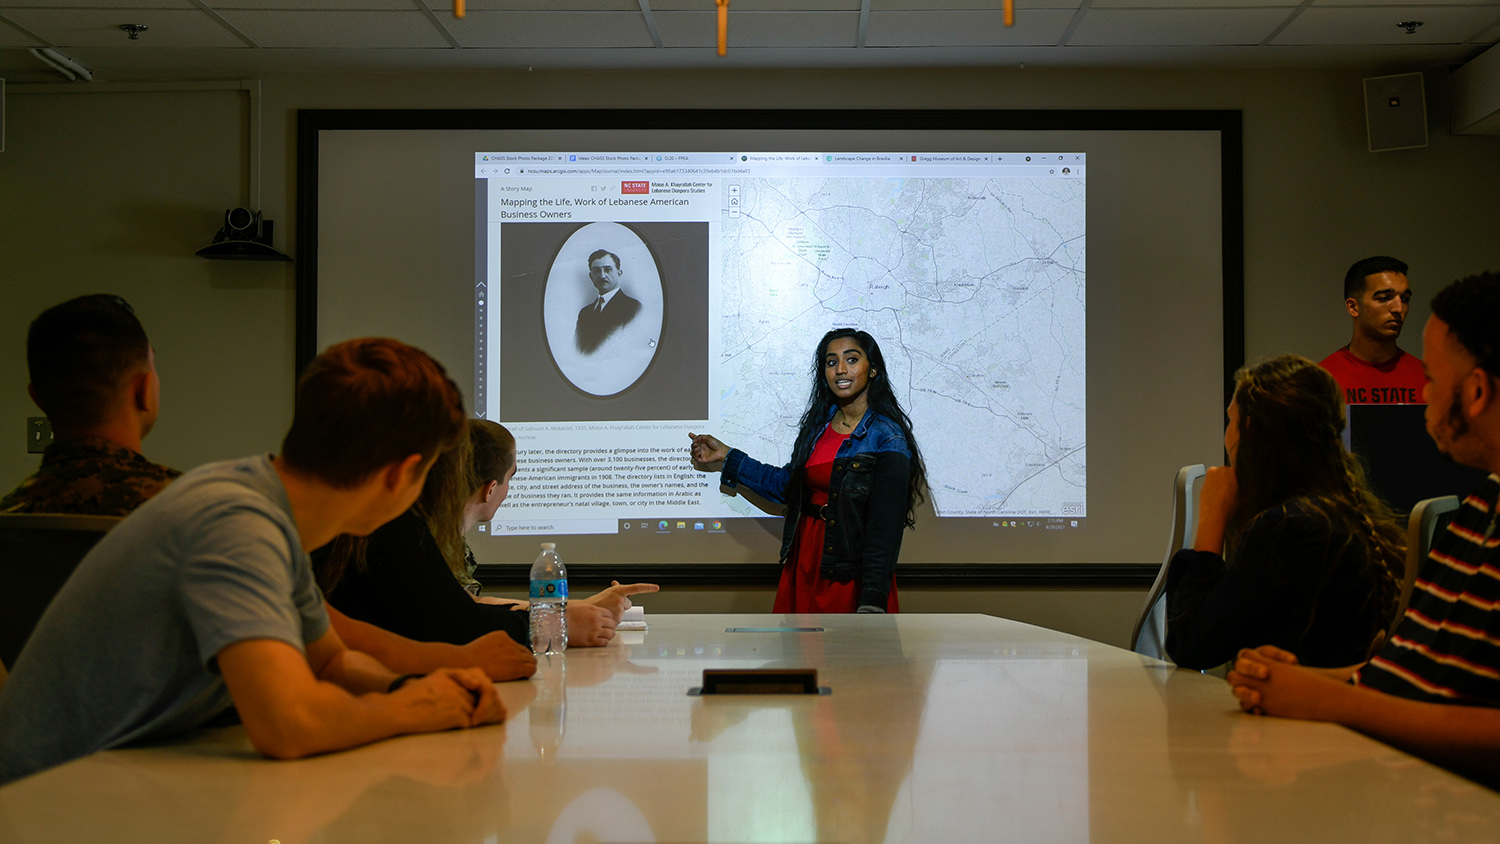 A student gives a presentation inside a dark room